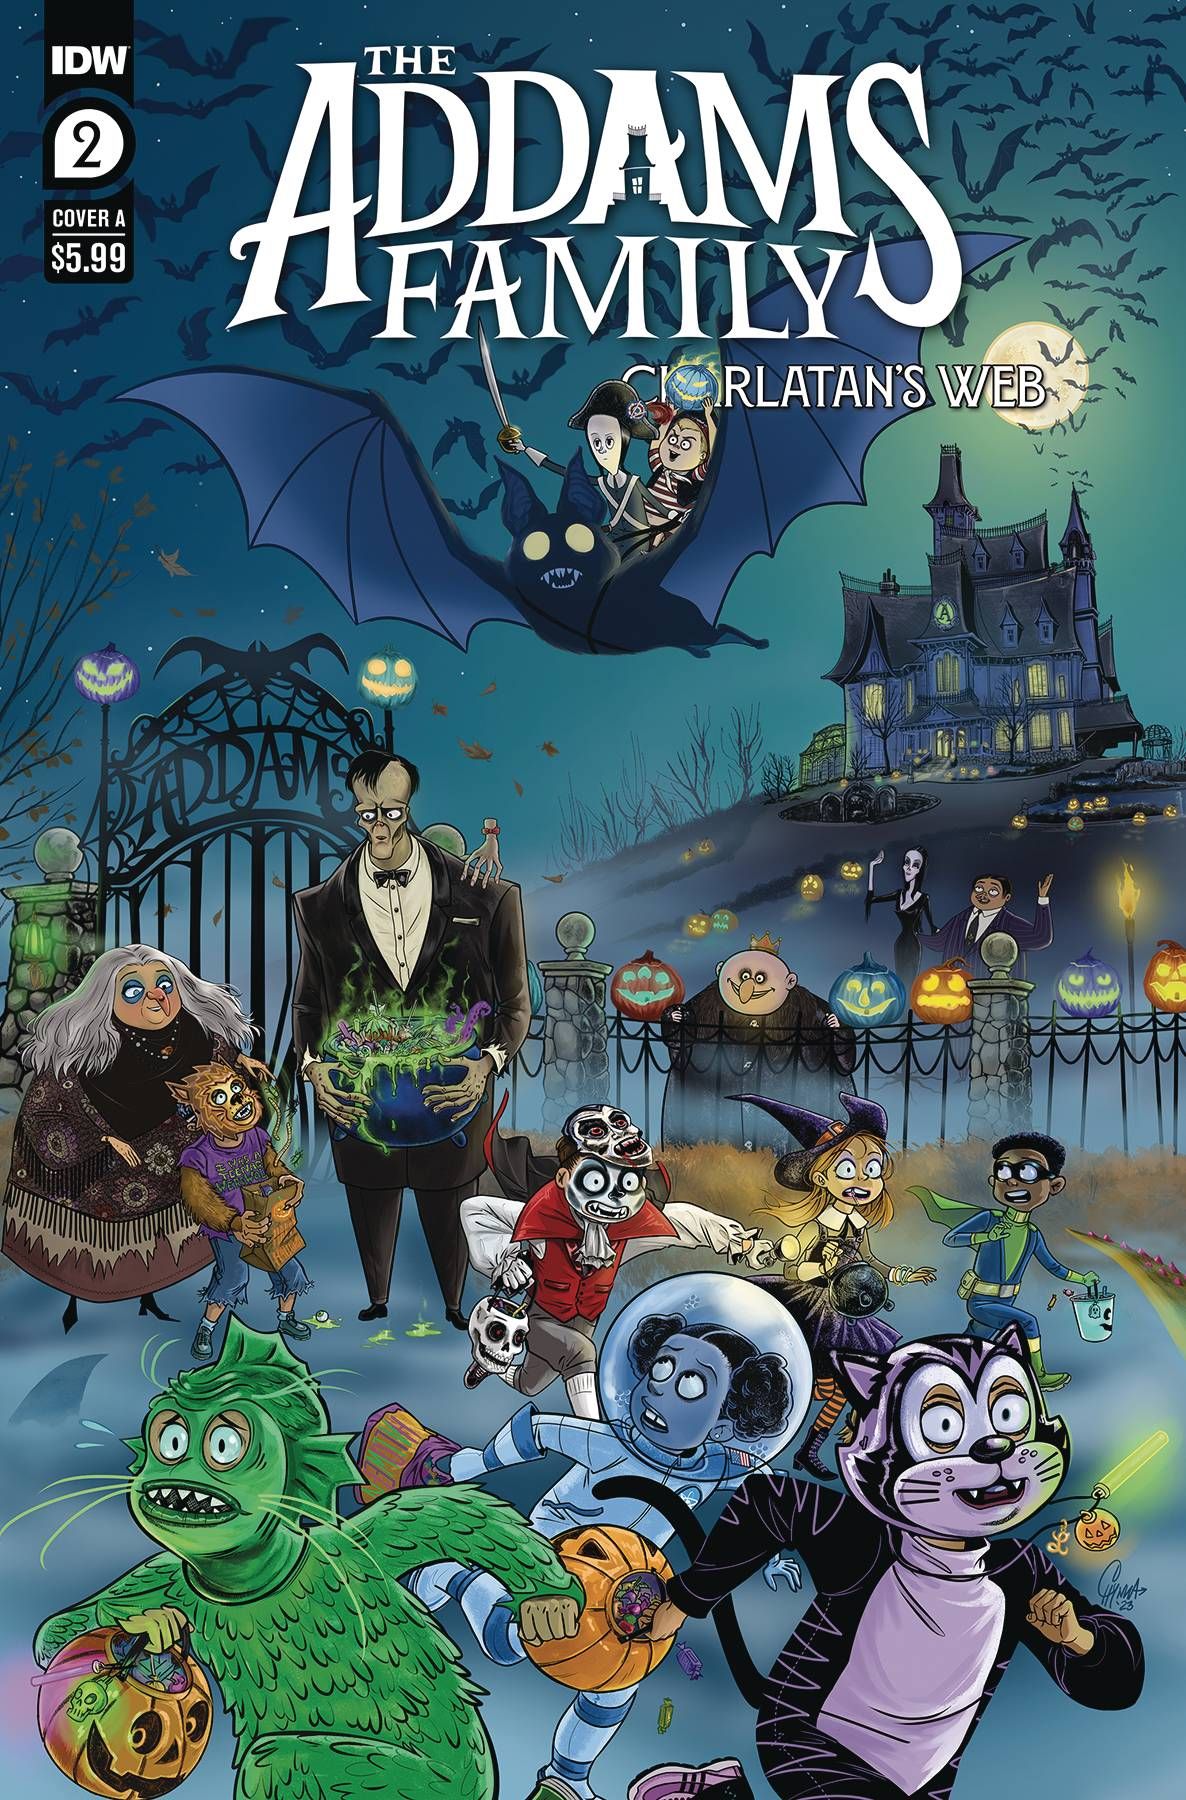 Addams Family: Charlatan's Web #2 Comic